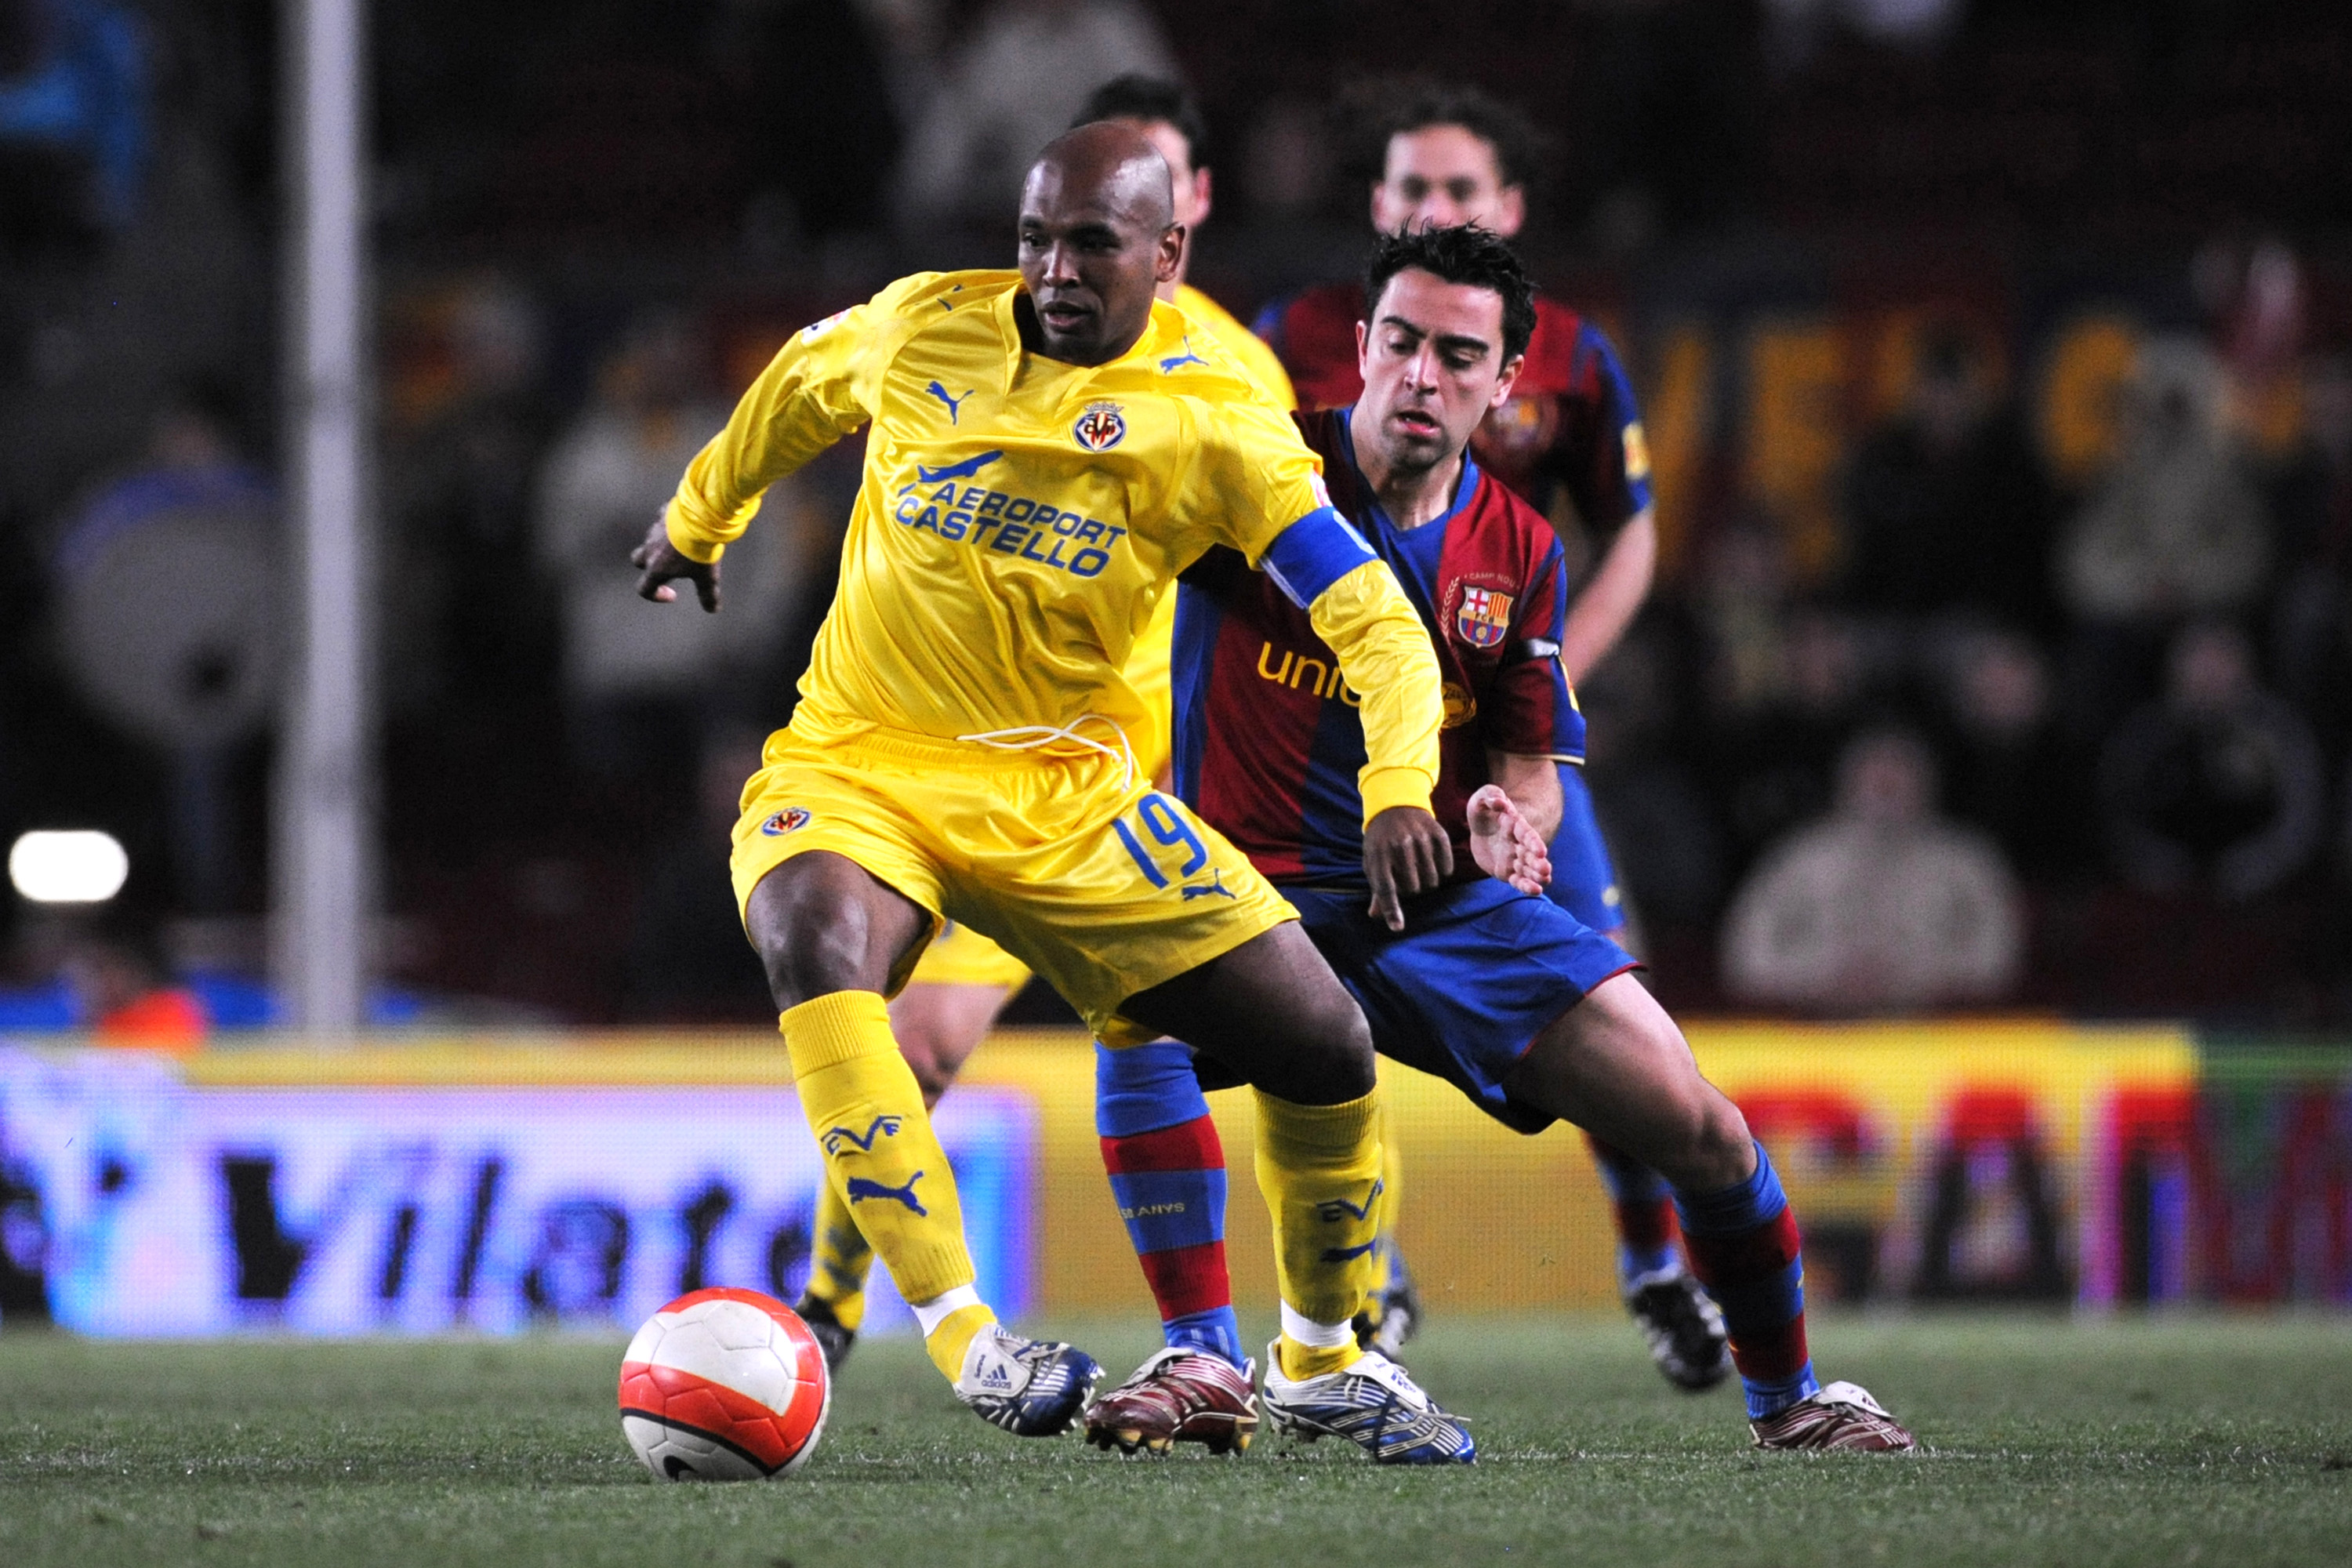 Villarreal's Marcos Senna controls the ball under pressure from Barcelona midfielder Xavi in a La Liga game in 2008.